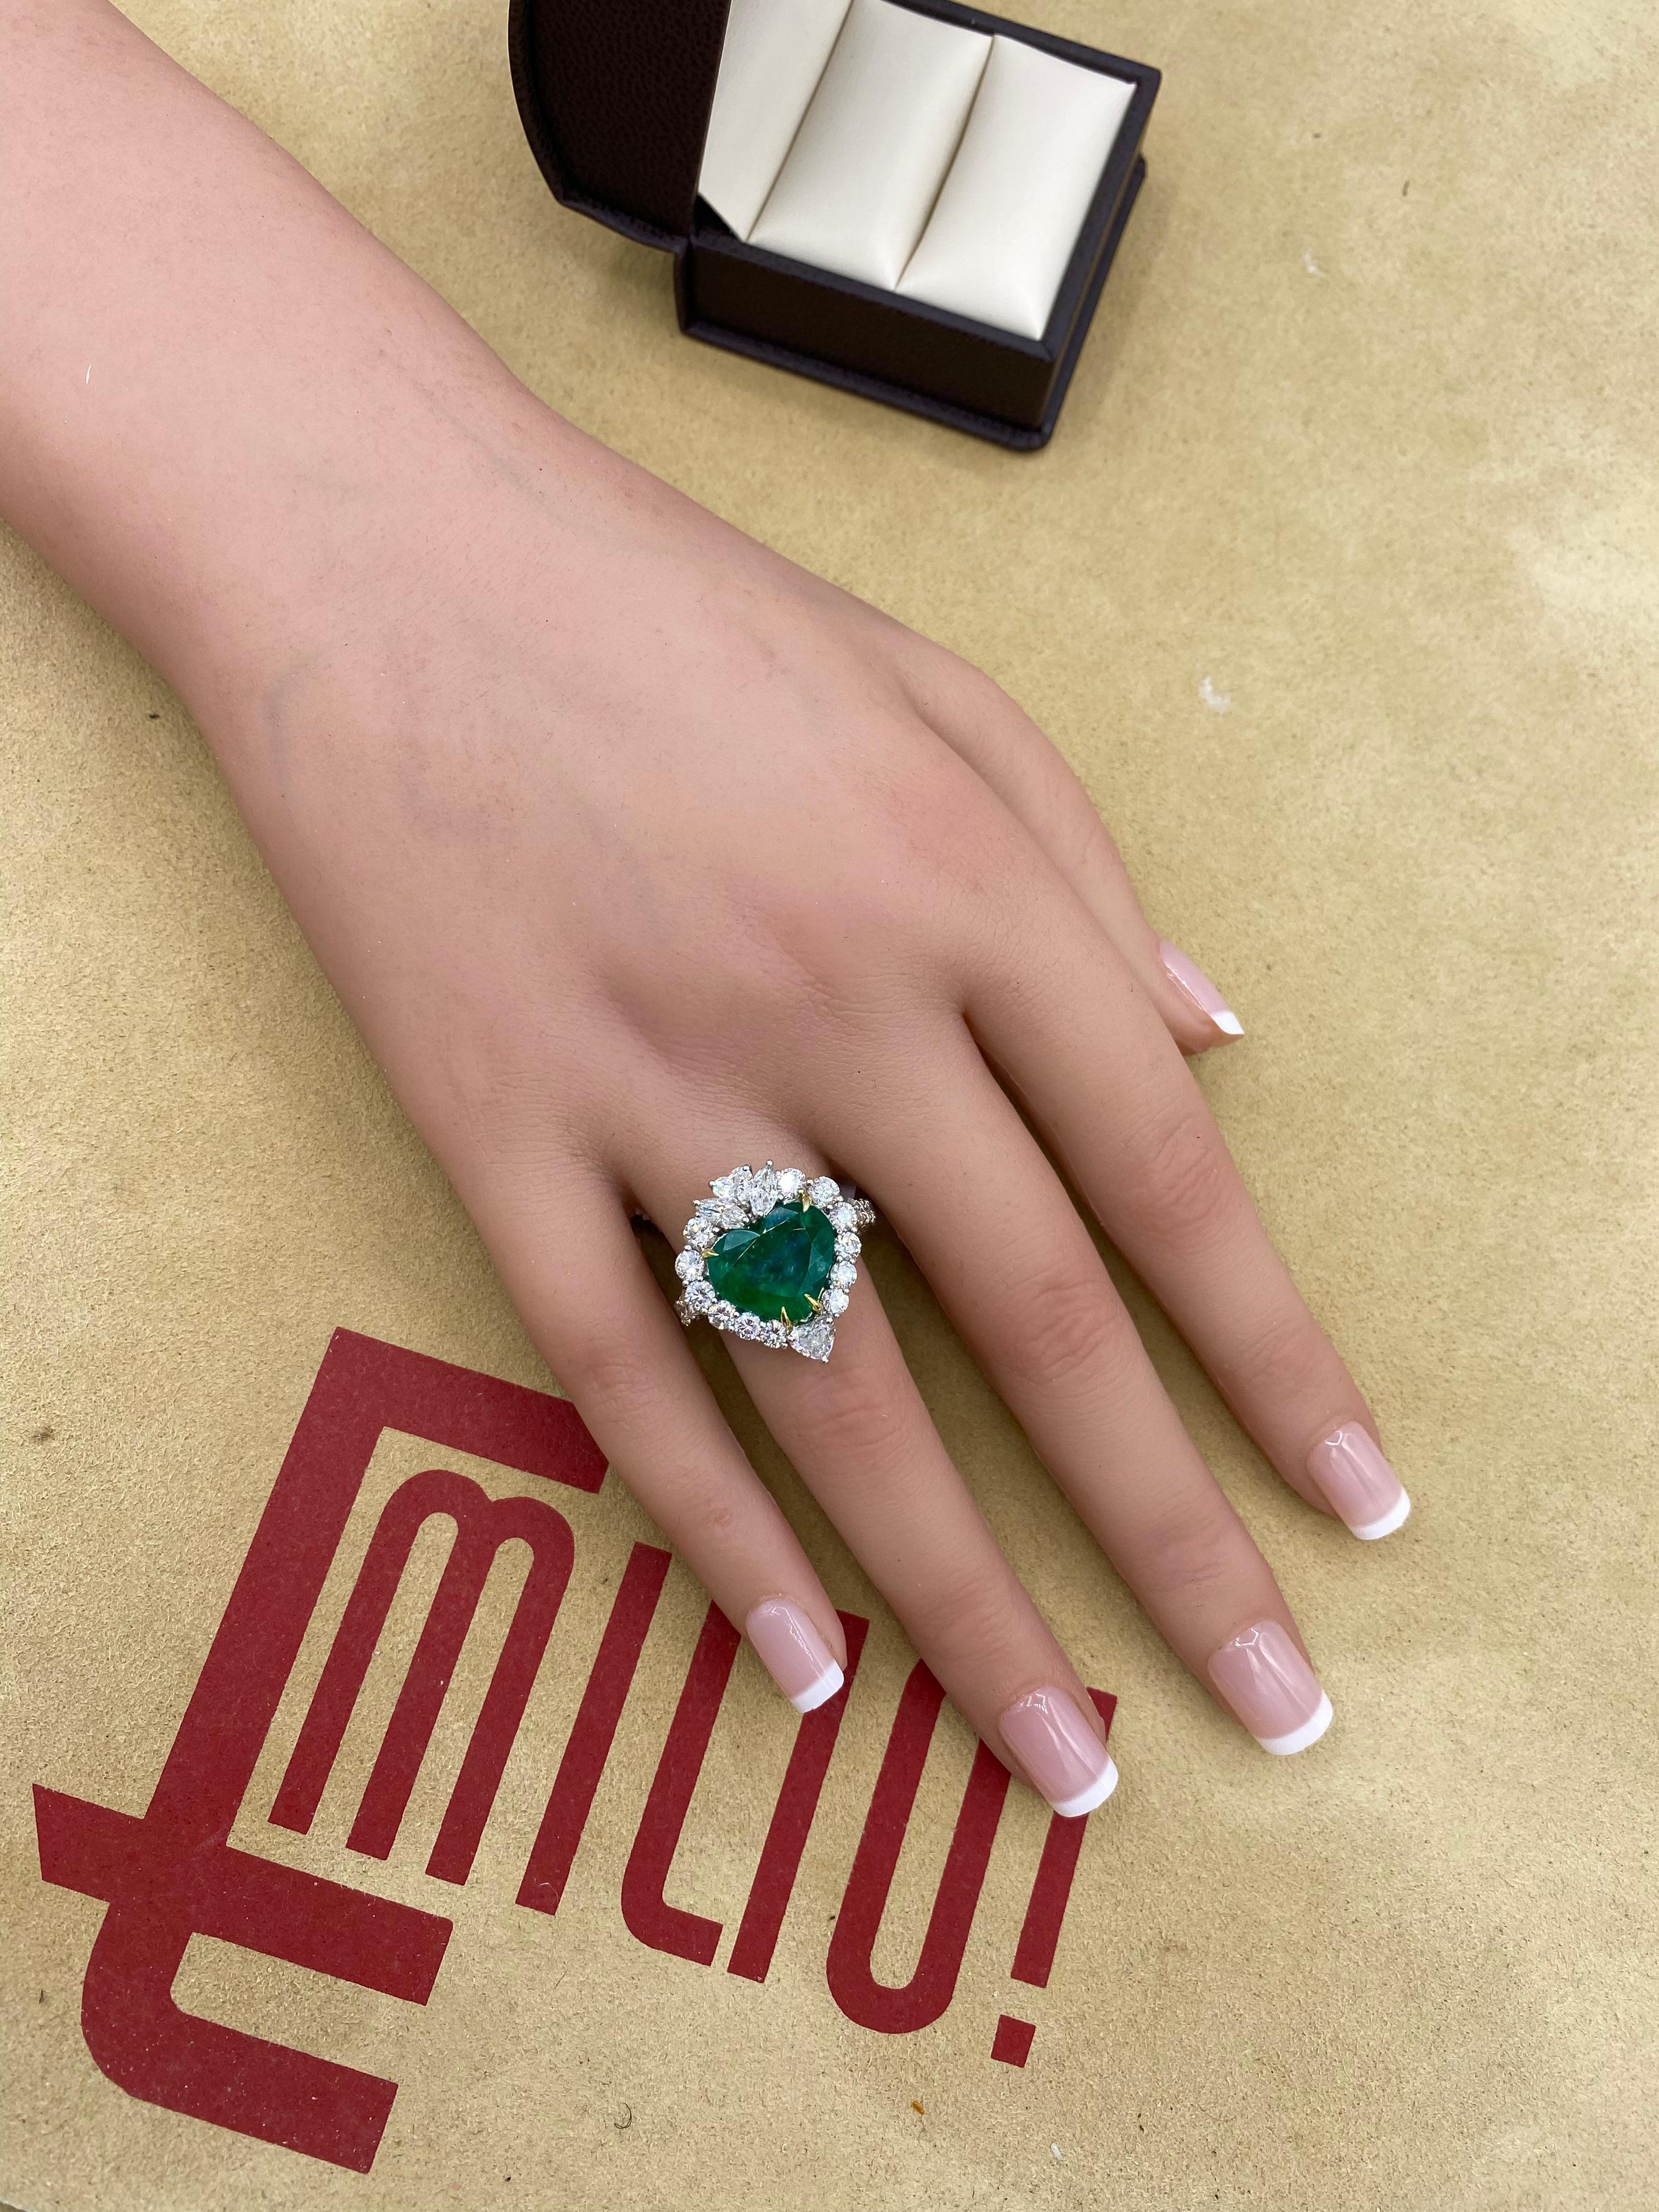 Emilio Jewelry Certified 6.00 Carat Colombian Muzo Vivid Green Diamond Ring For Sale 2